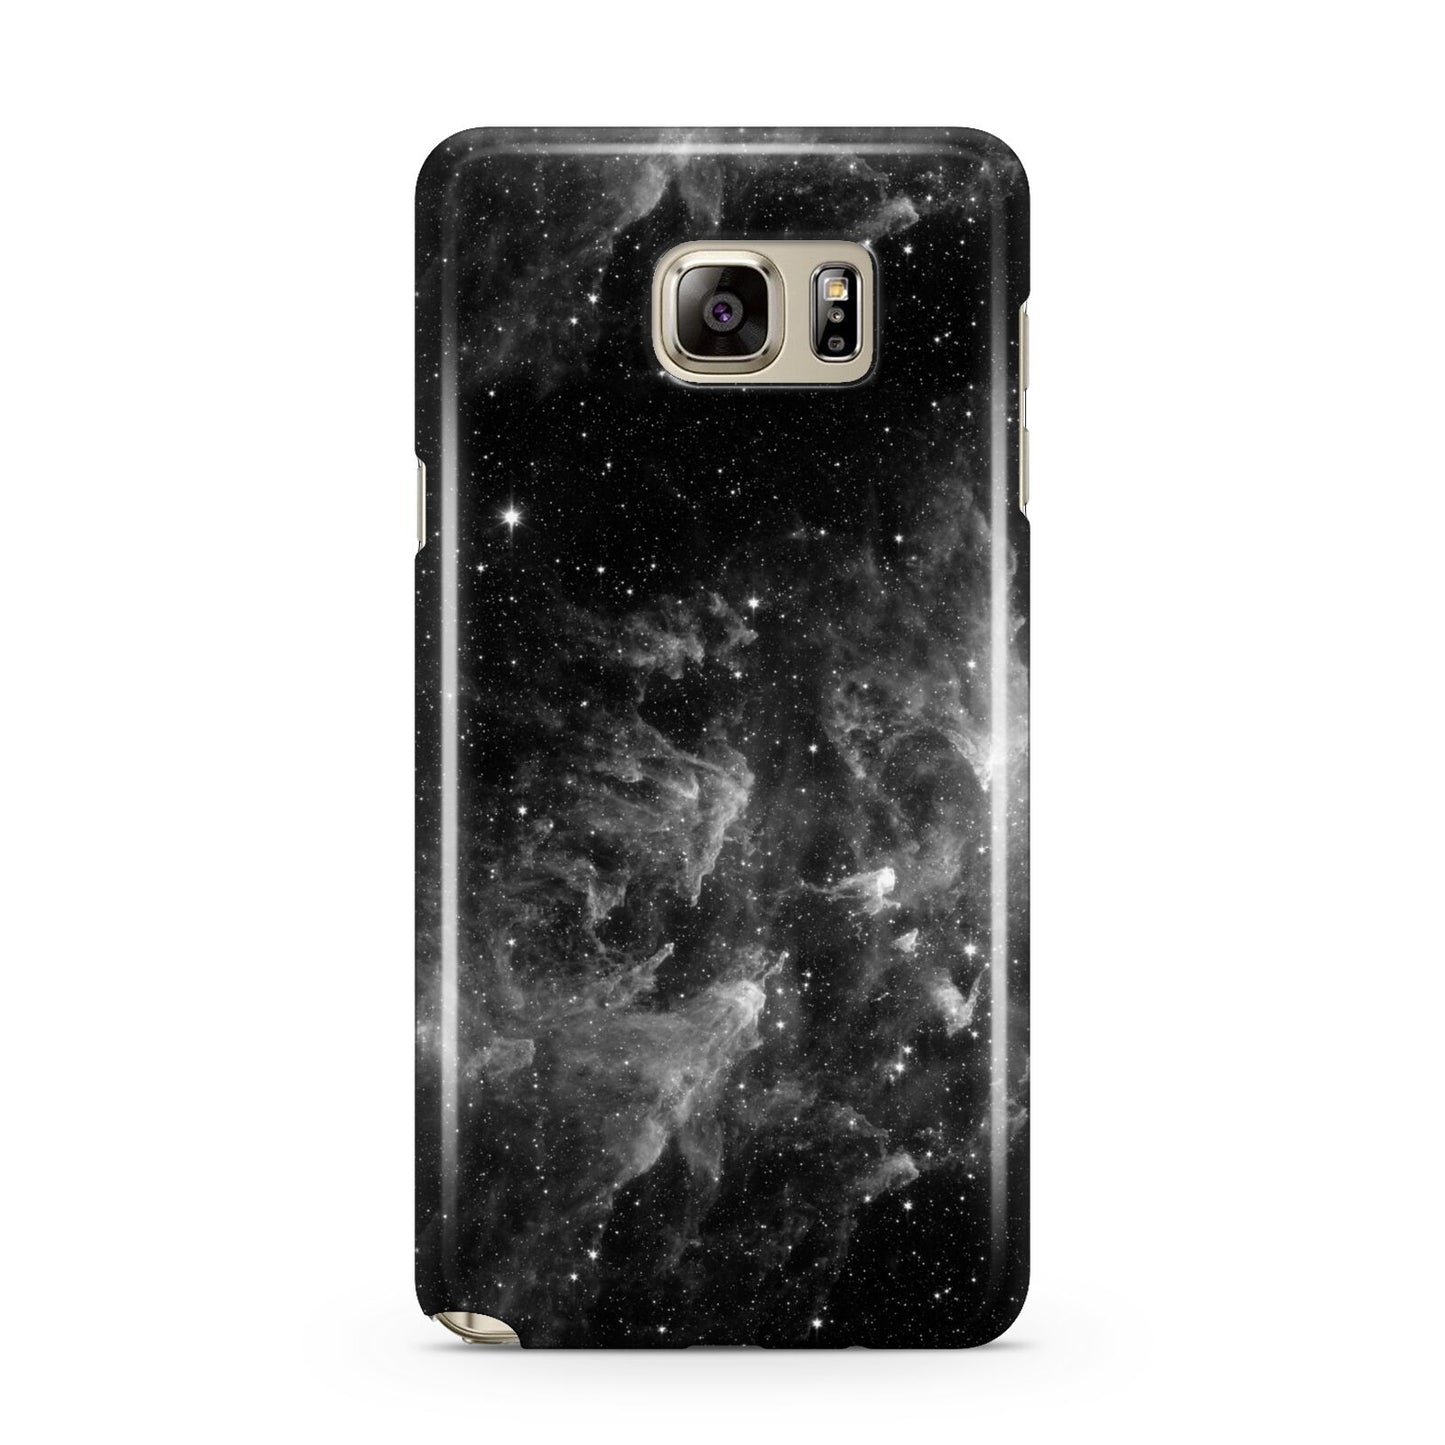 Black Space Samsung Galaxy Note 5 Case